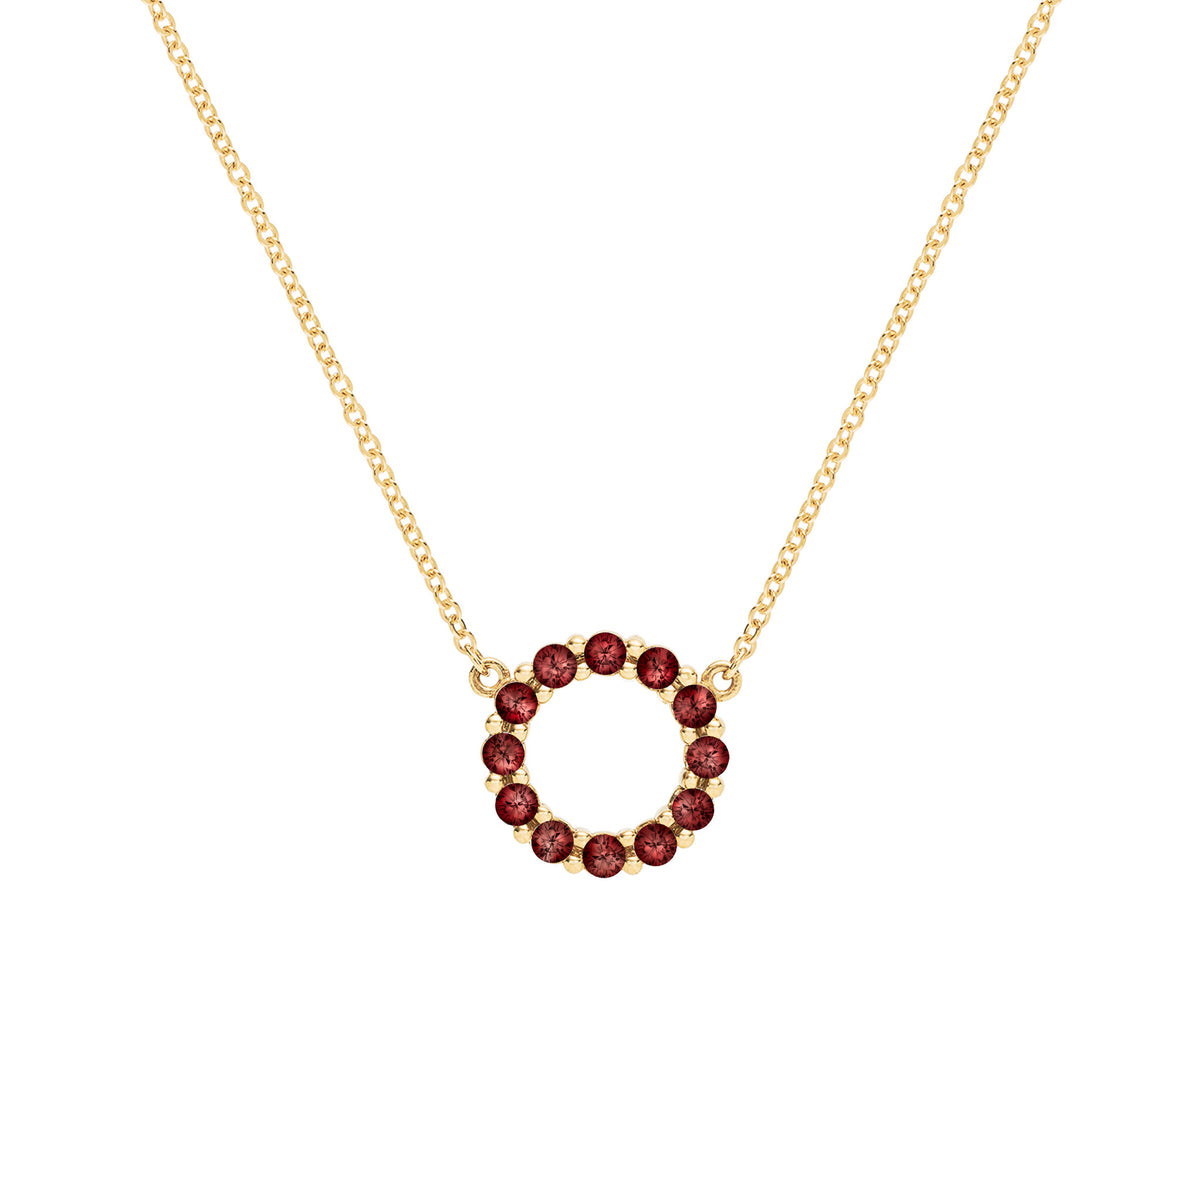 Round Garnet Pendant Necklace in Gold | KLENOTA